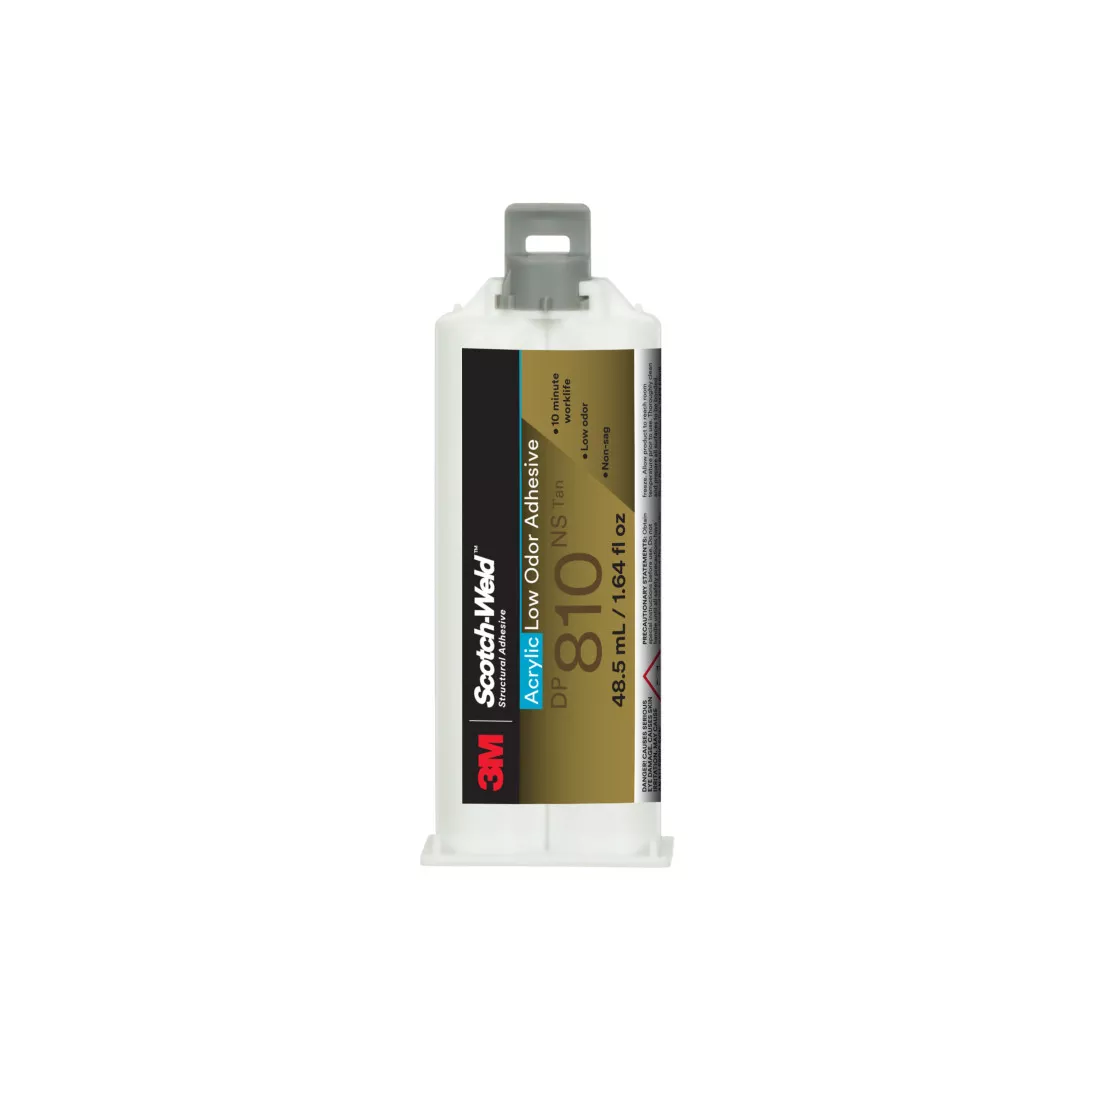 3M™ Scotch-Weld™ Low Odor Acrylic Adhesive DP810NS, Tan, 48.5 mL
Duo-Pak, 12/case